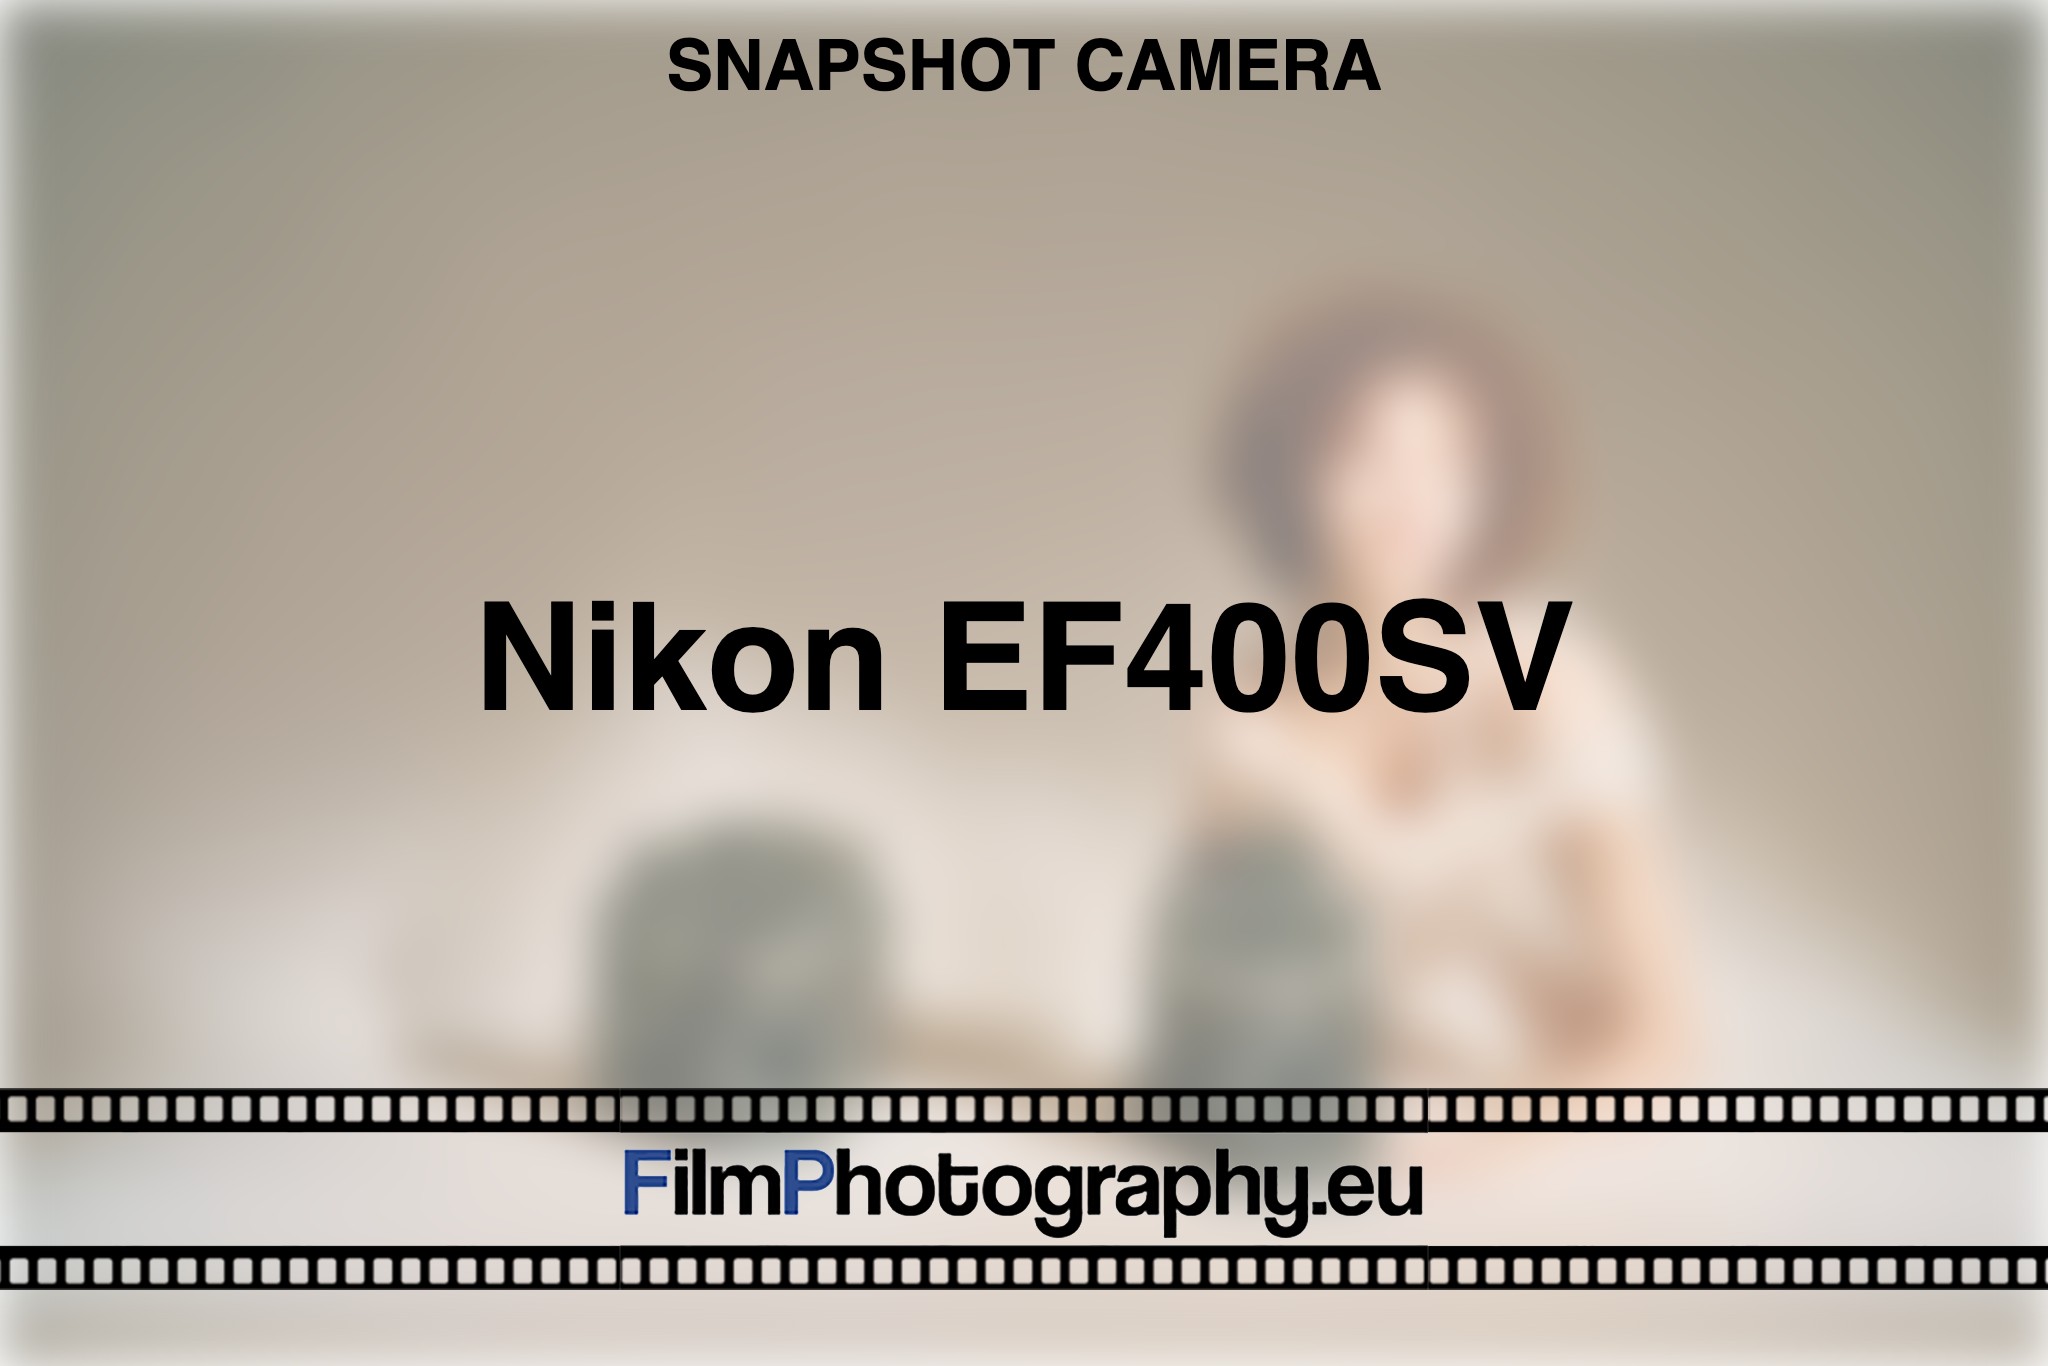 nikon-ef400sv-snapshot-camera-bnv